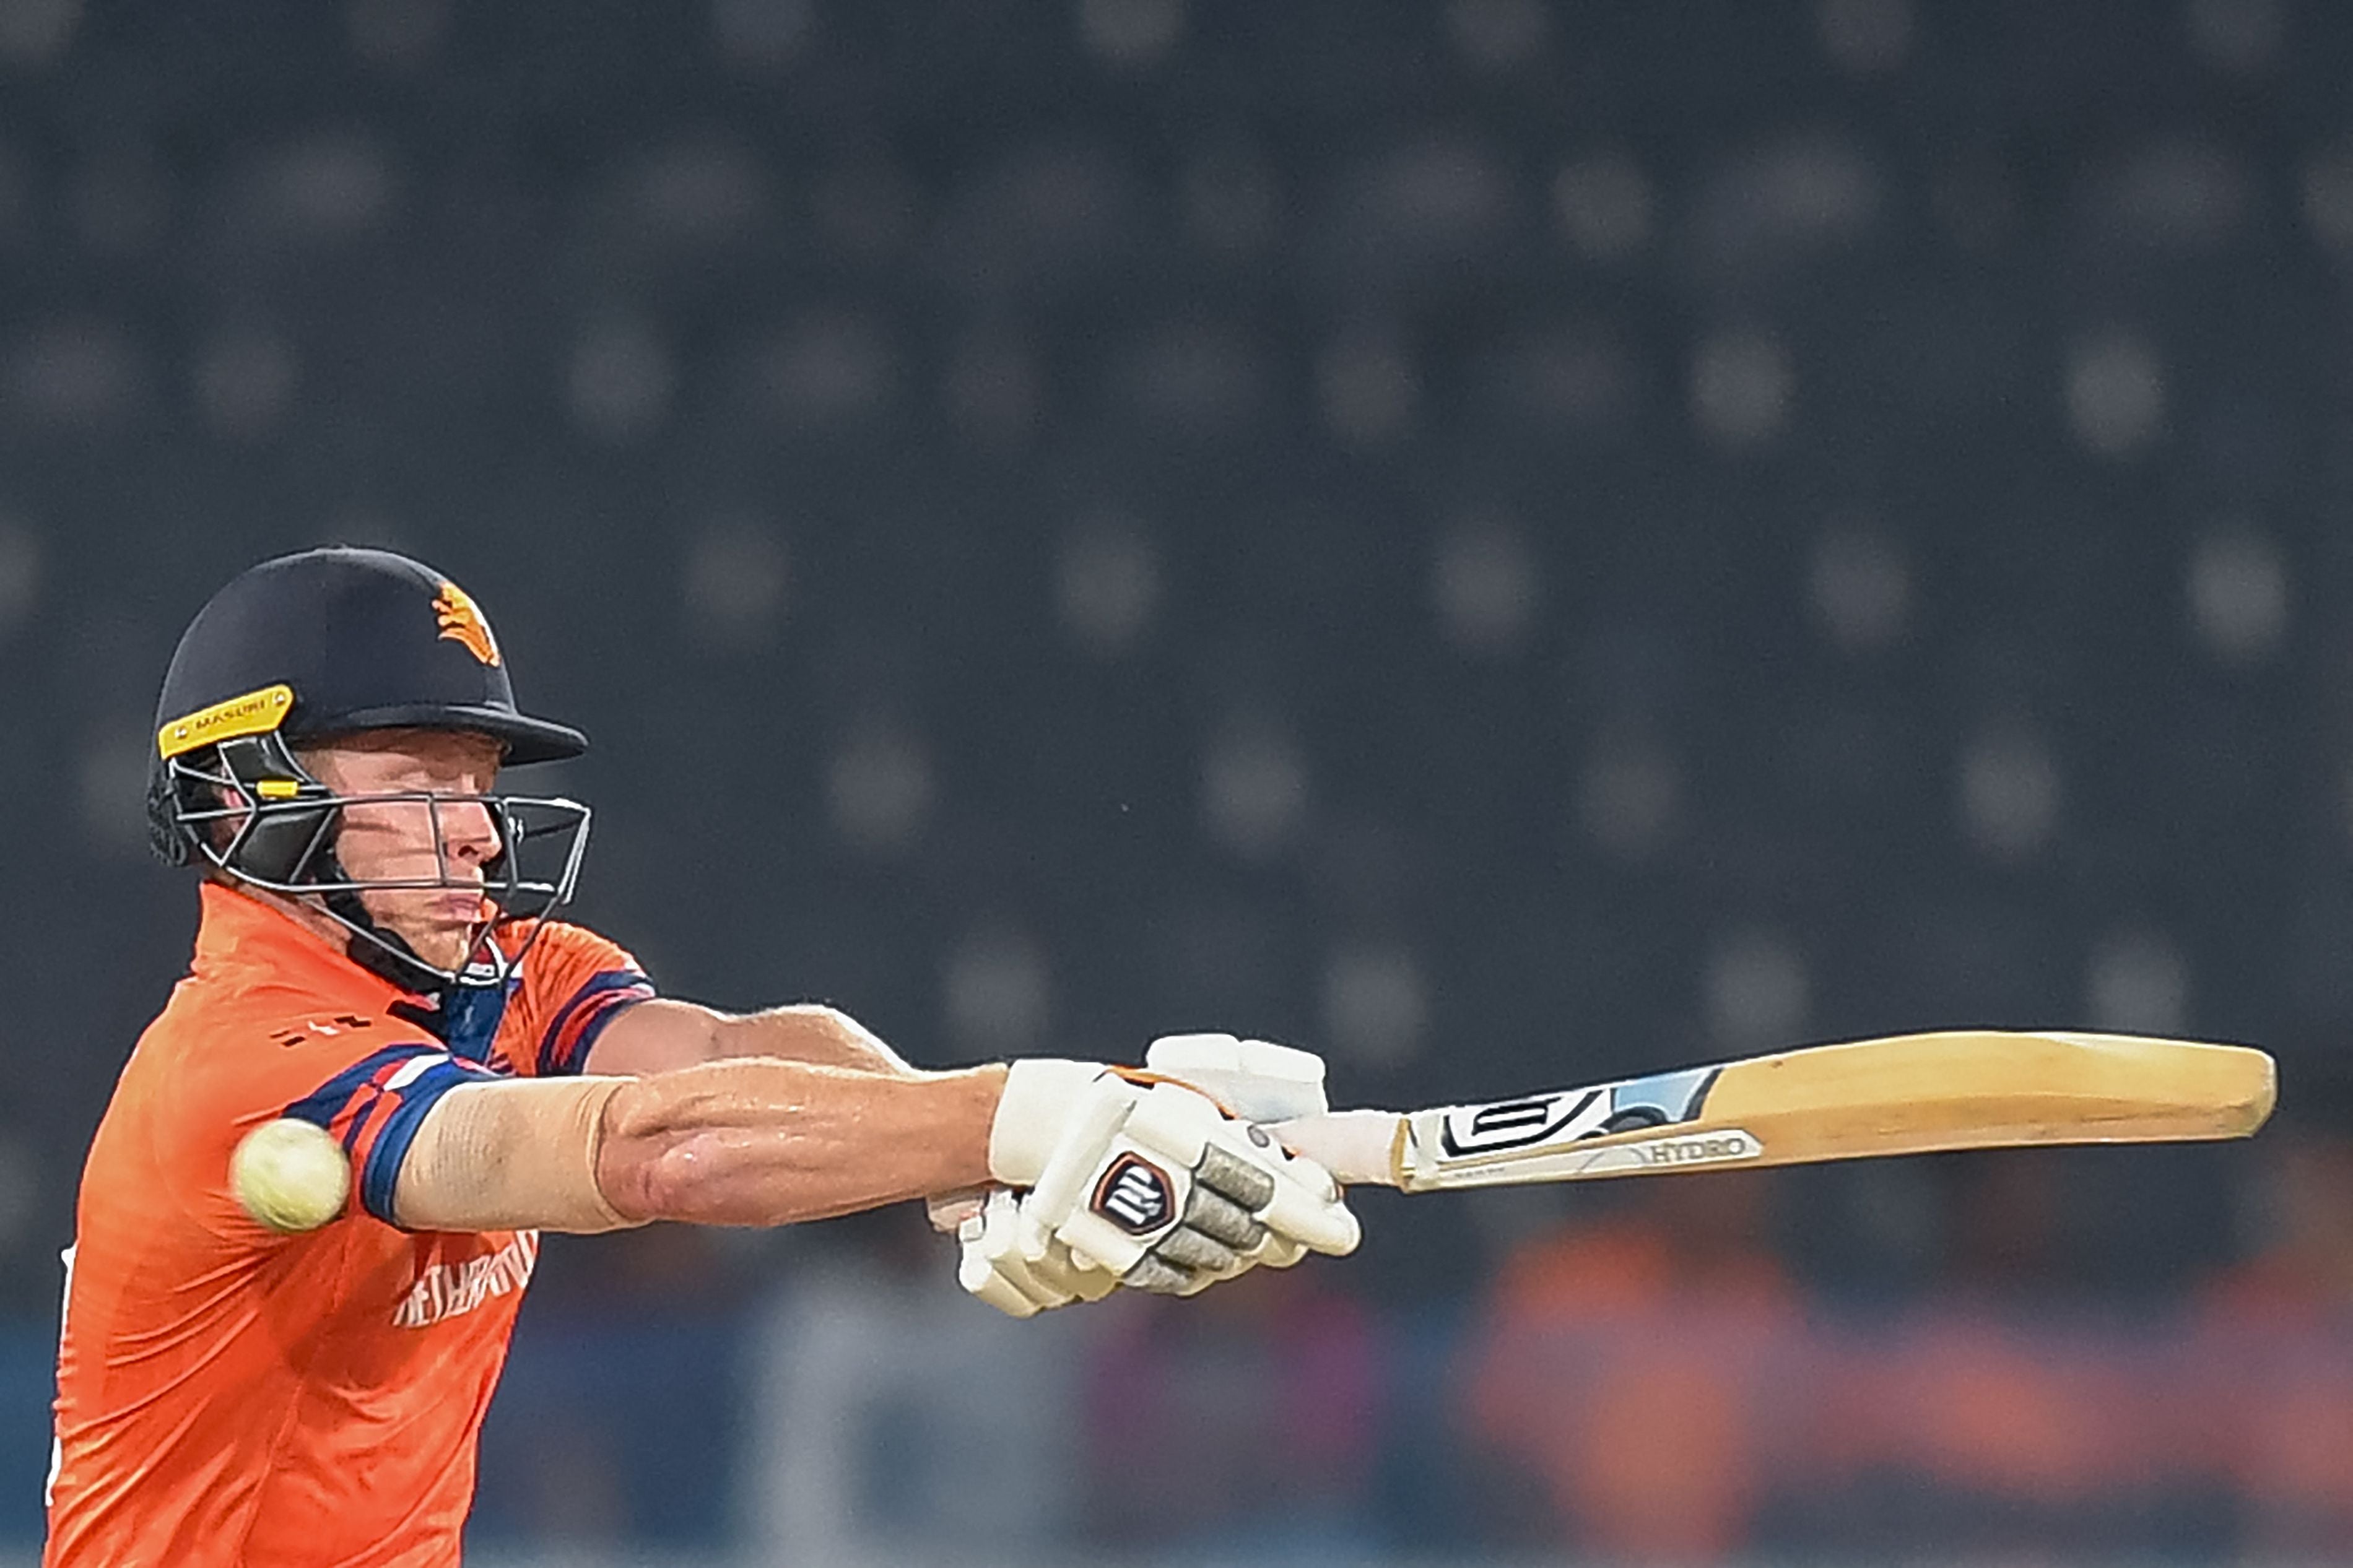 Netherlands’ Sybrand Engelbrecht plays a shot during the 2023 ICC Men’s Cricket World Cup one-day international match between New Zealand and Netherlands